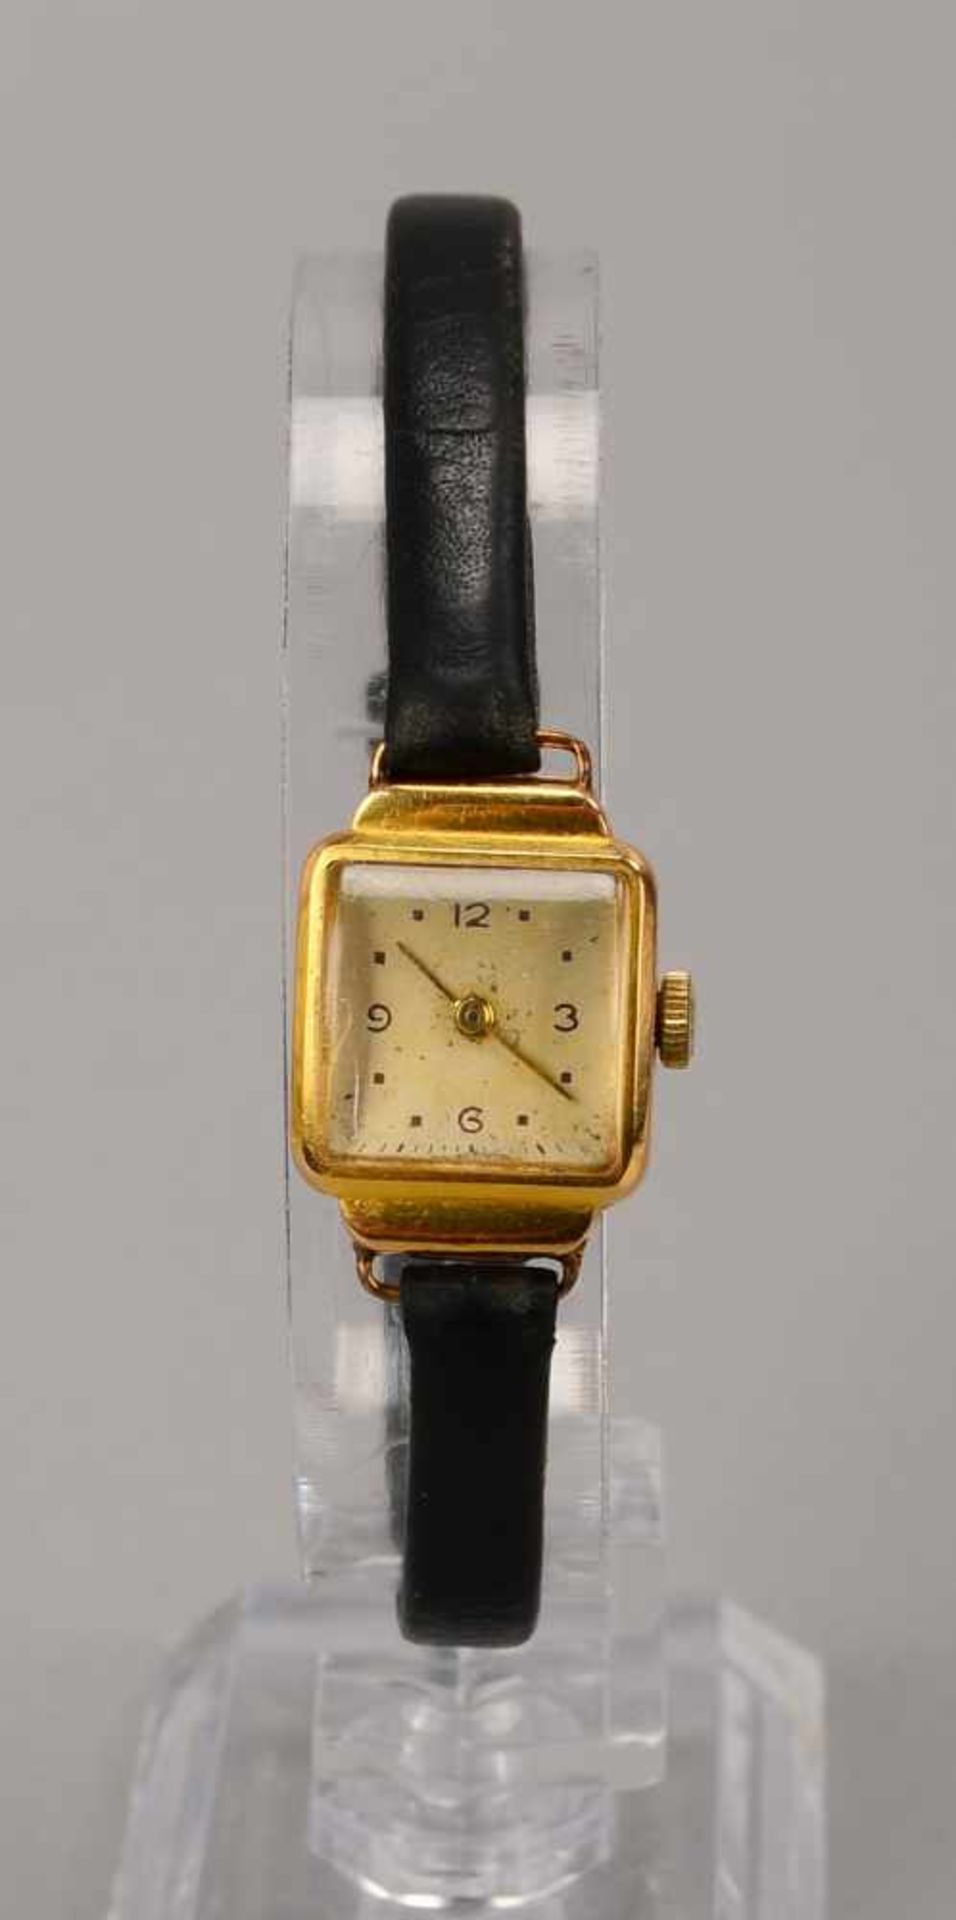 Damen-Armbanduhr (Art déco), 750 GG-Gehäuse, mit Lederarmband, Uhr läuft an; Maße Gehäuse 3,2 cm x